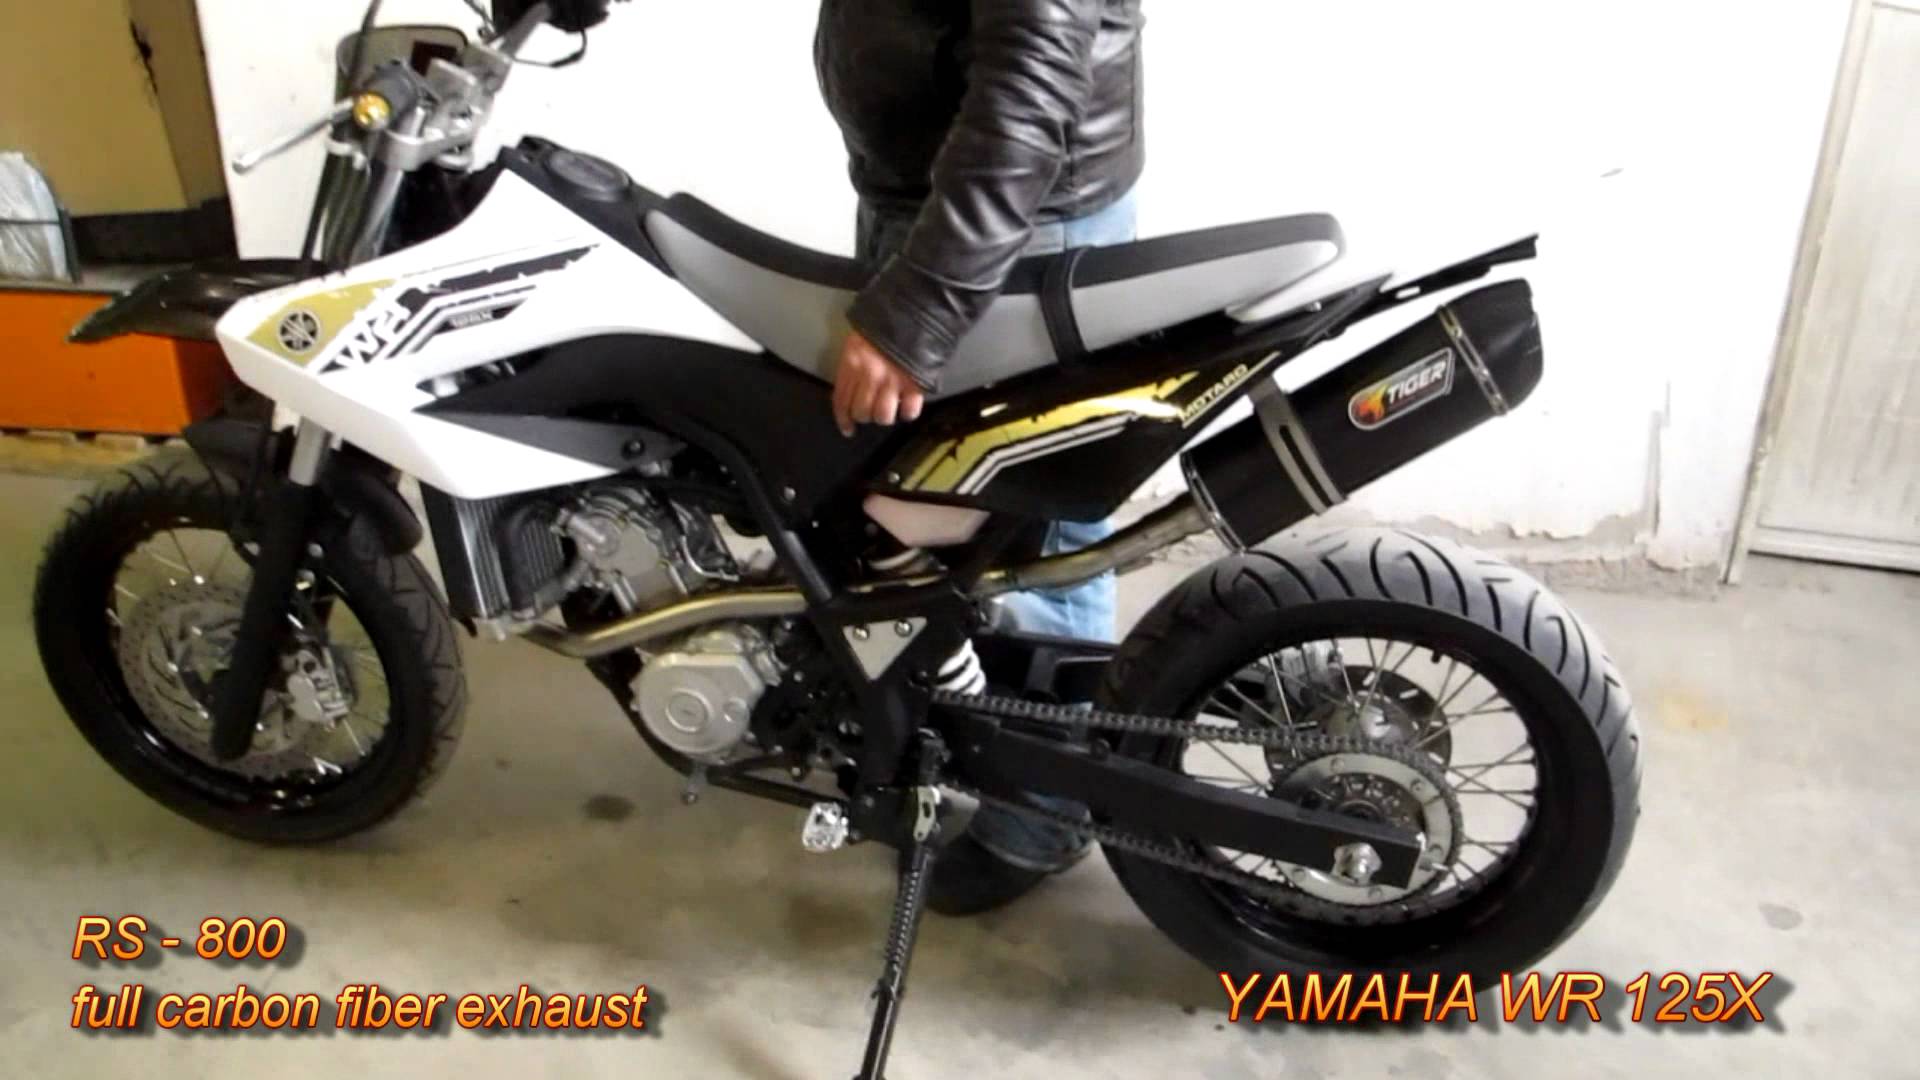 Amazing Yamaha Wr 125 X Pictures & Backgrounds